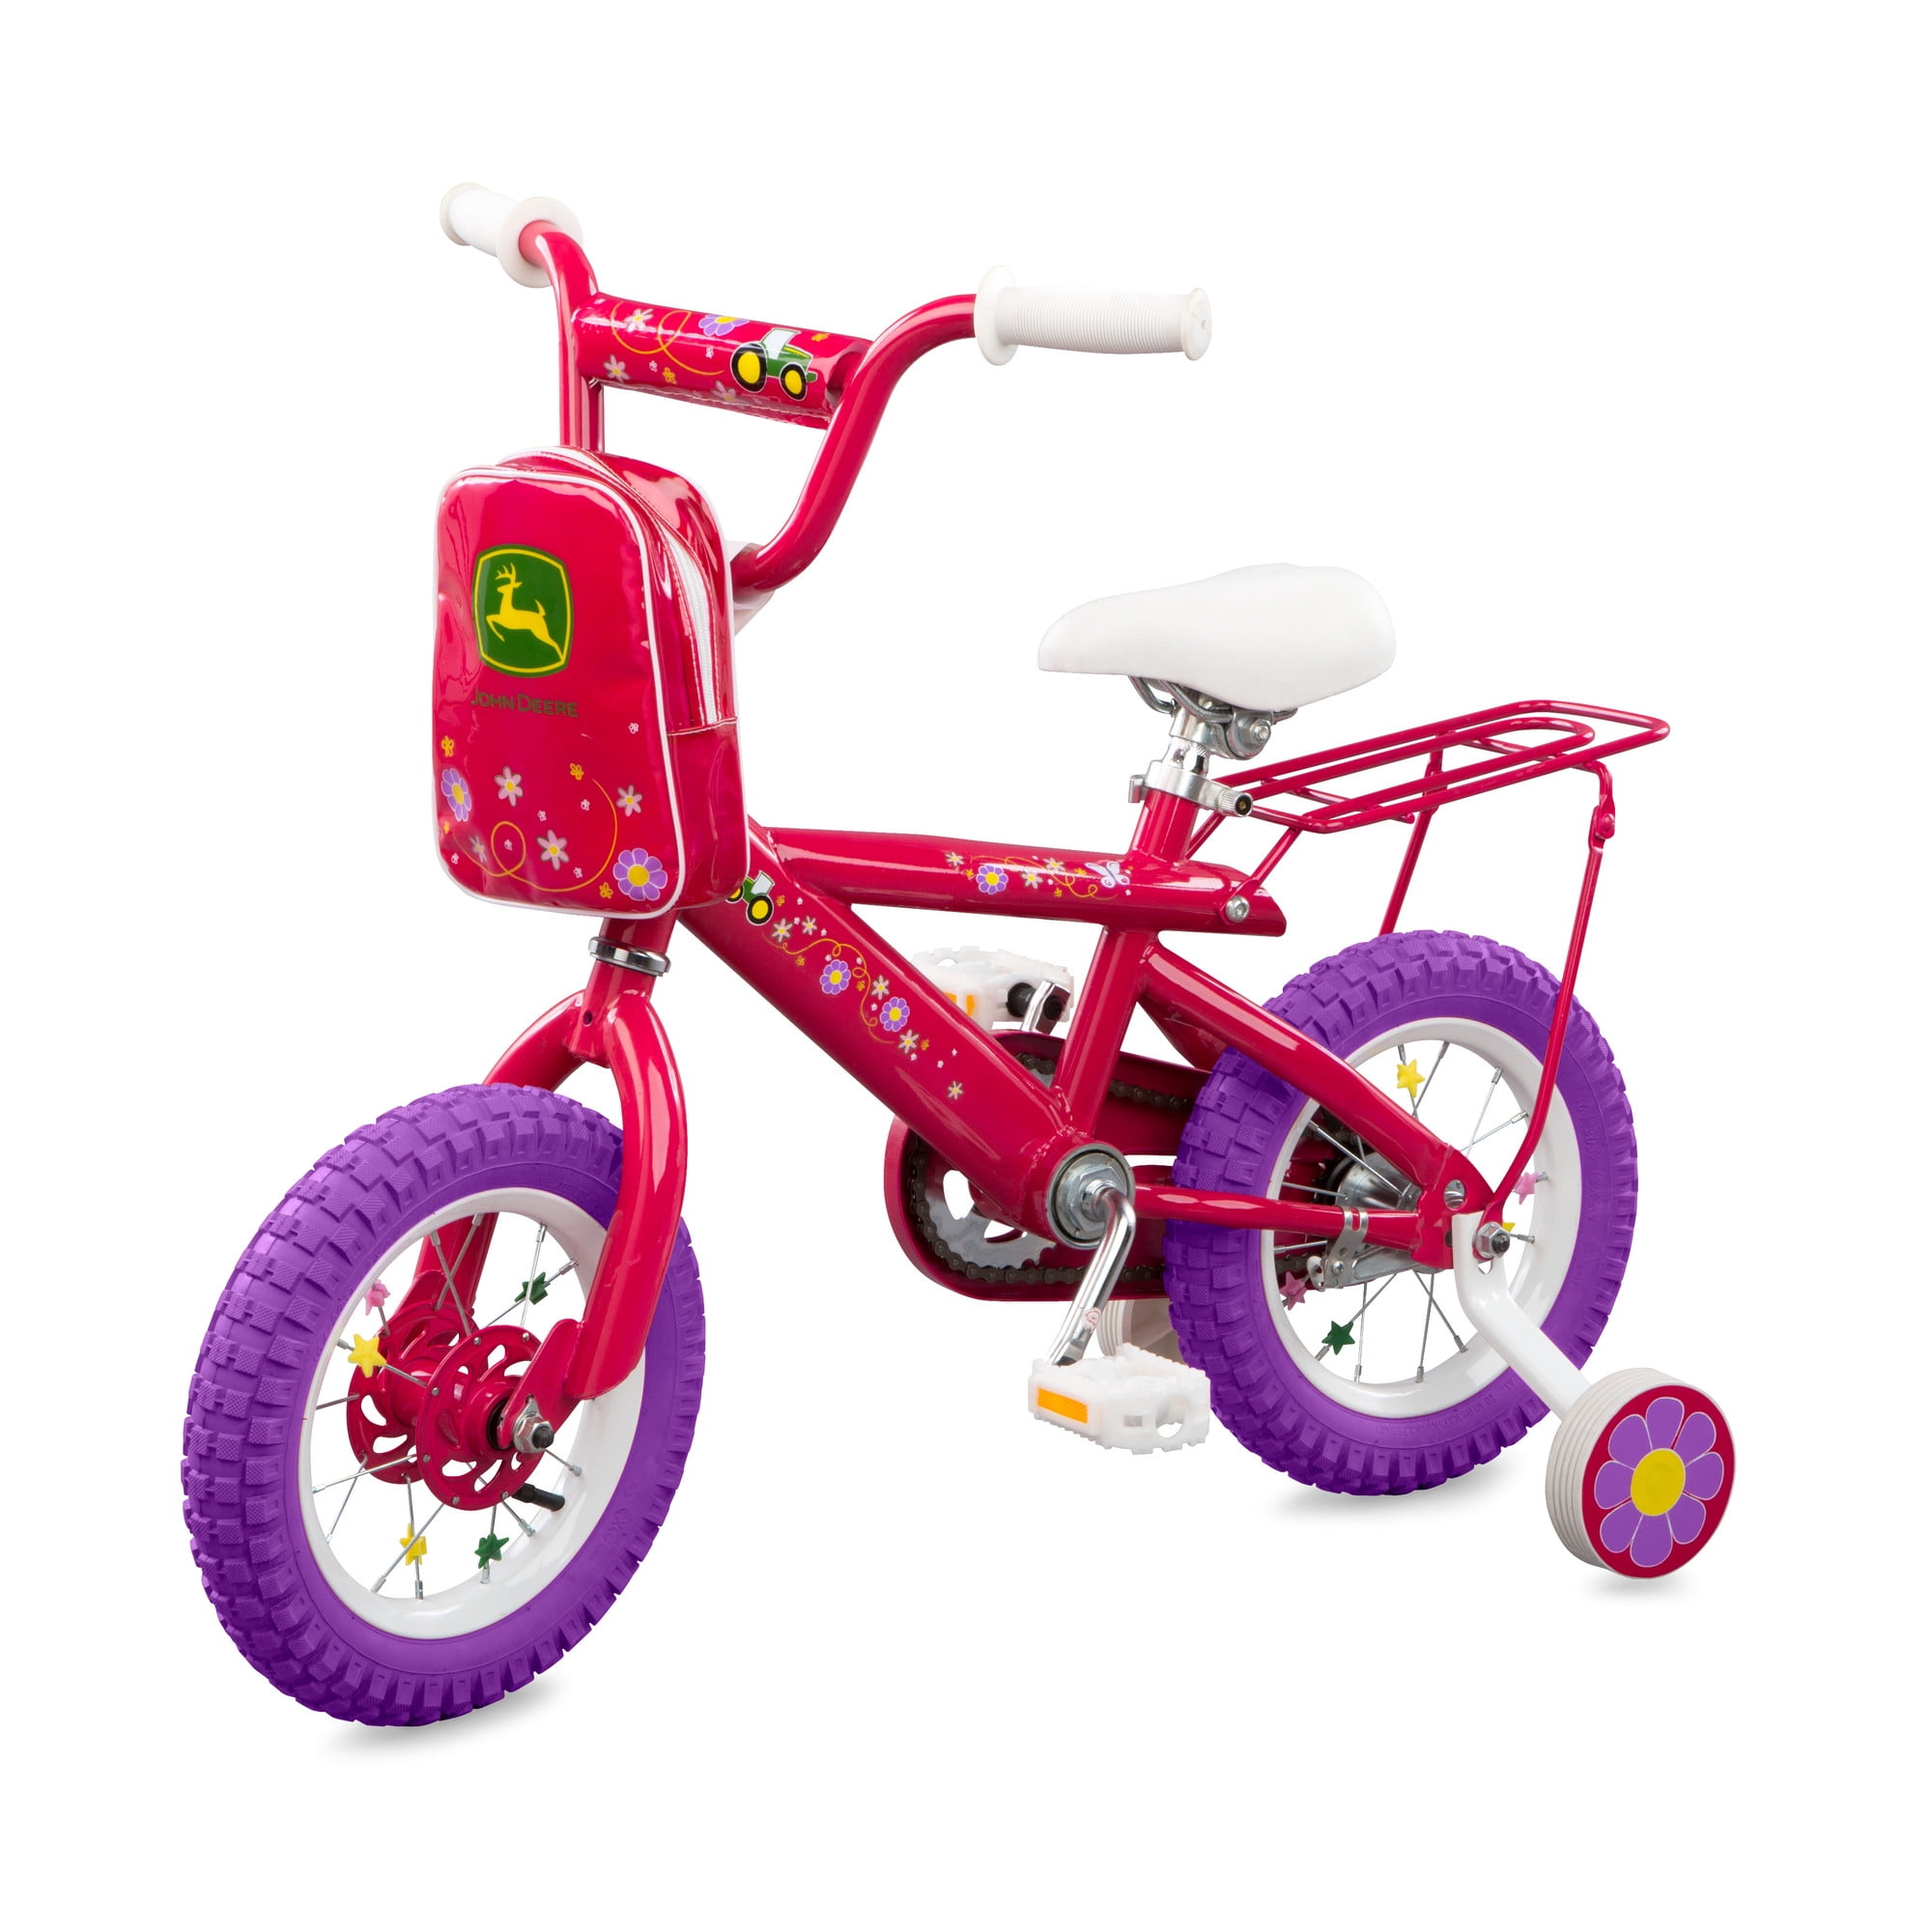 Details about   12" Kids Bike Bicycle Boys & Girls w/ Flash Training Wheels Safety Brake 2Colors 